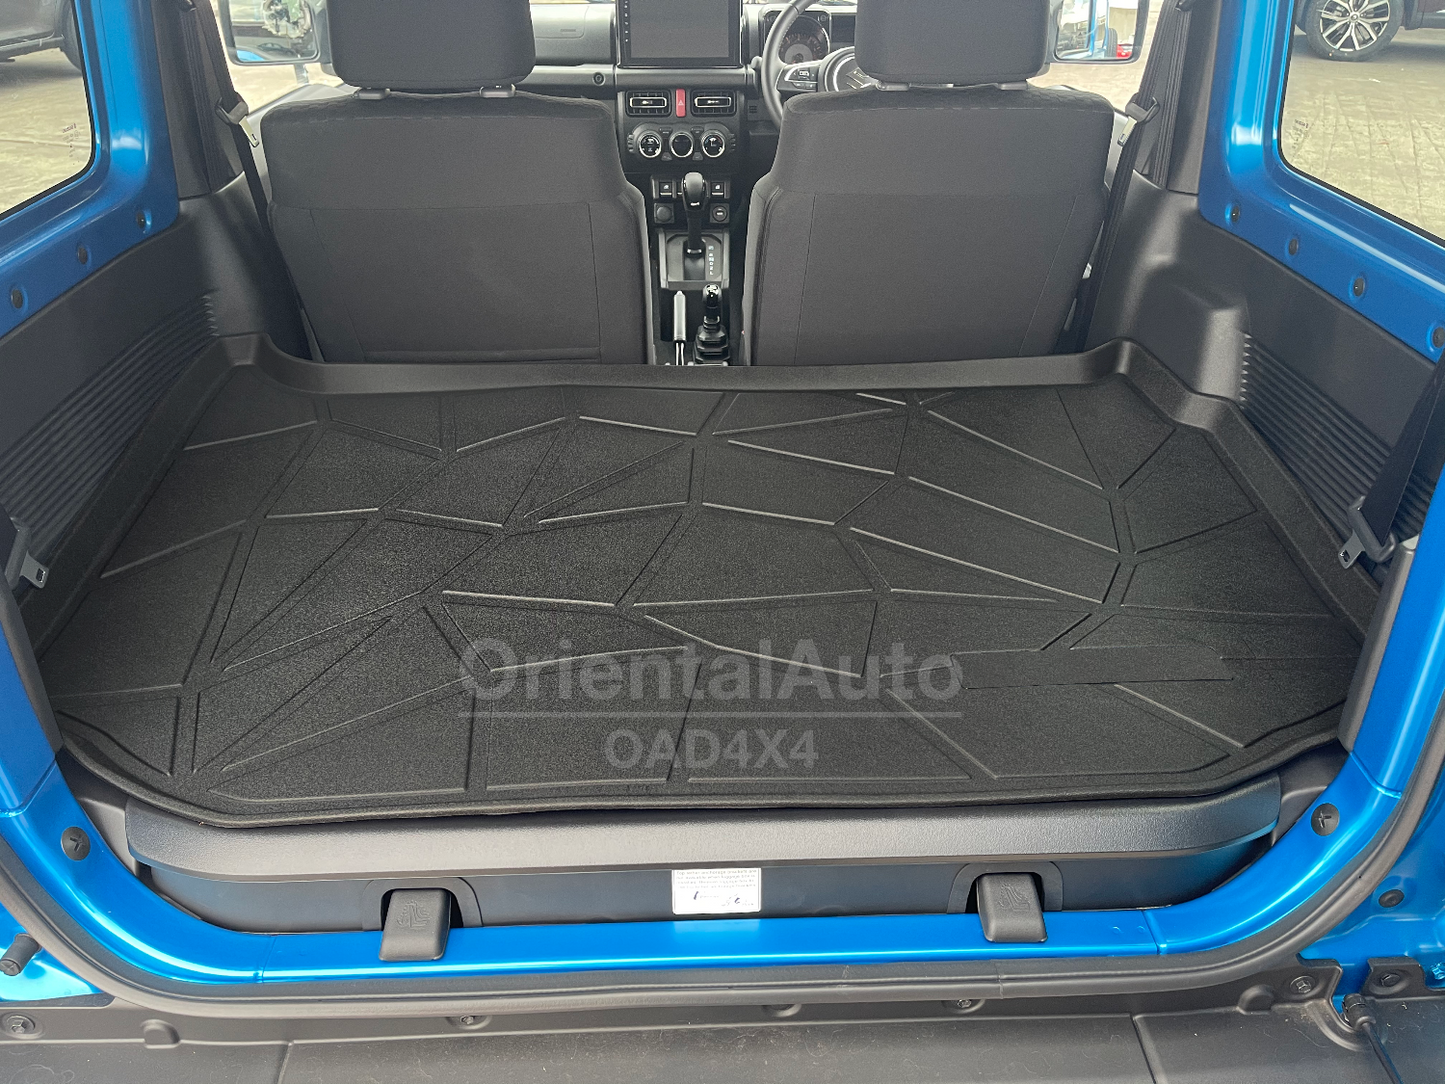 OAD 2 Rows 5D TPE Floor mats & Cargo Mat for Suzuki Jimny 3 Doors Auto Transmission 2018+ Door Sill Covered Floor Mat + Boot Mat Liner